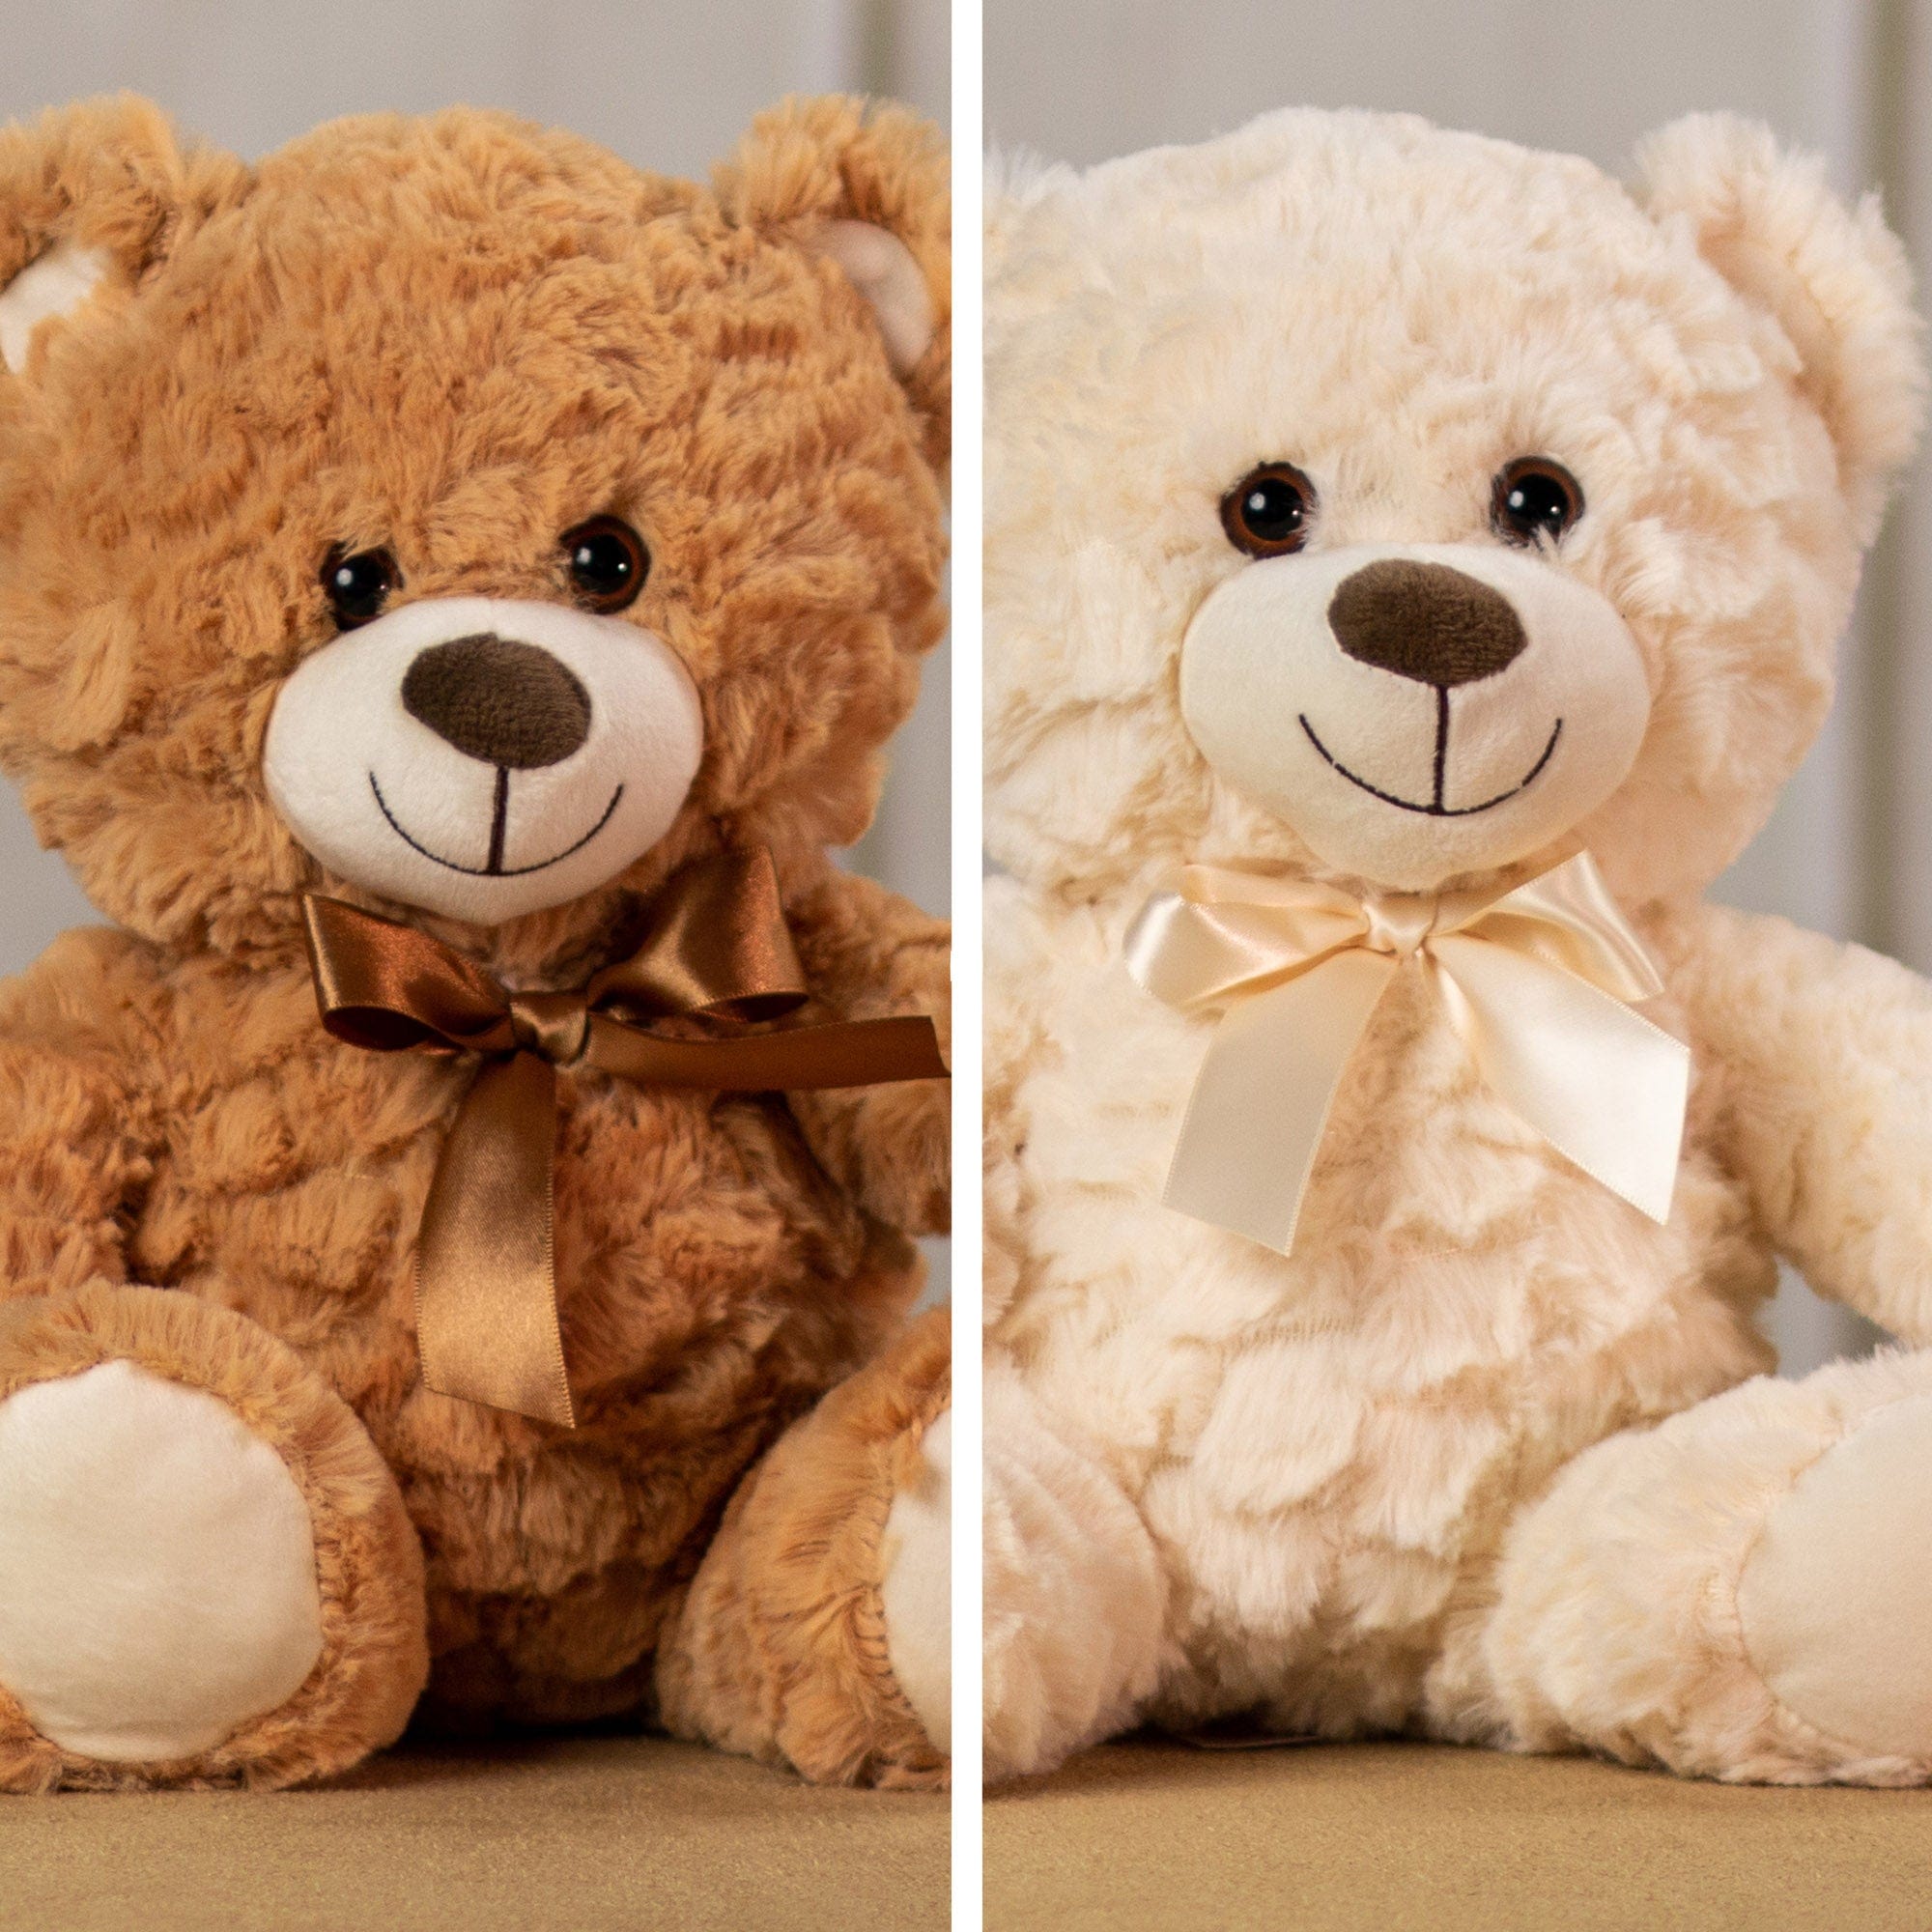 Plush in a Rush  Wholesale Plush Toys, Teddy Bears & Stuffed Animals